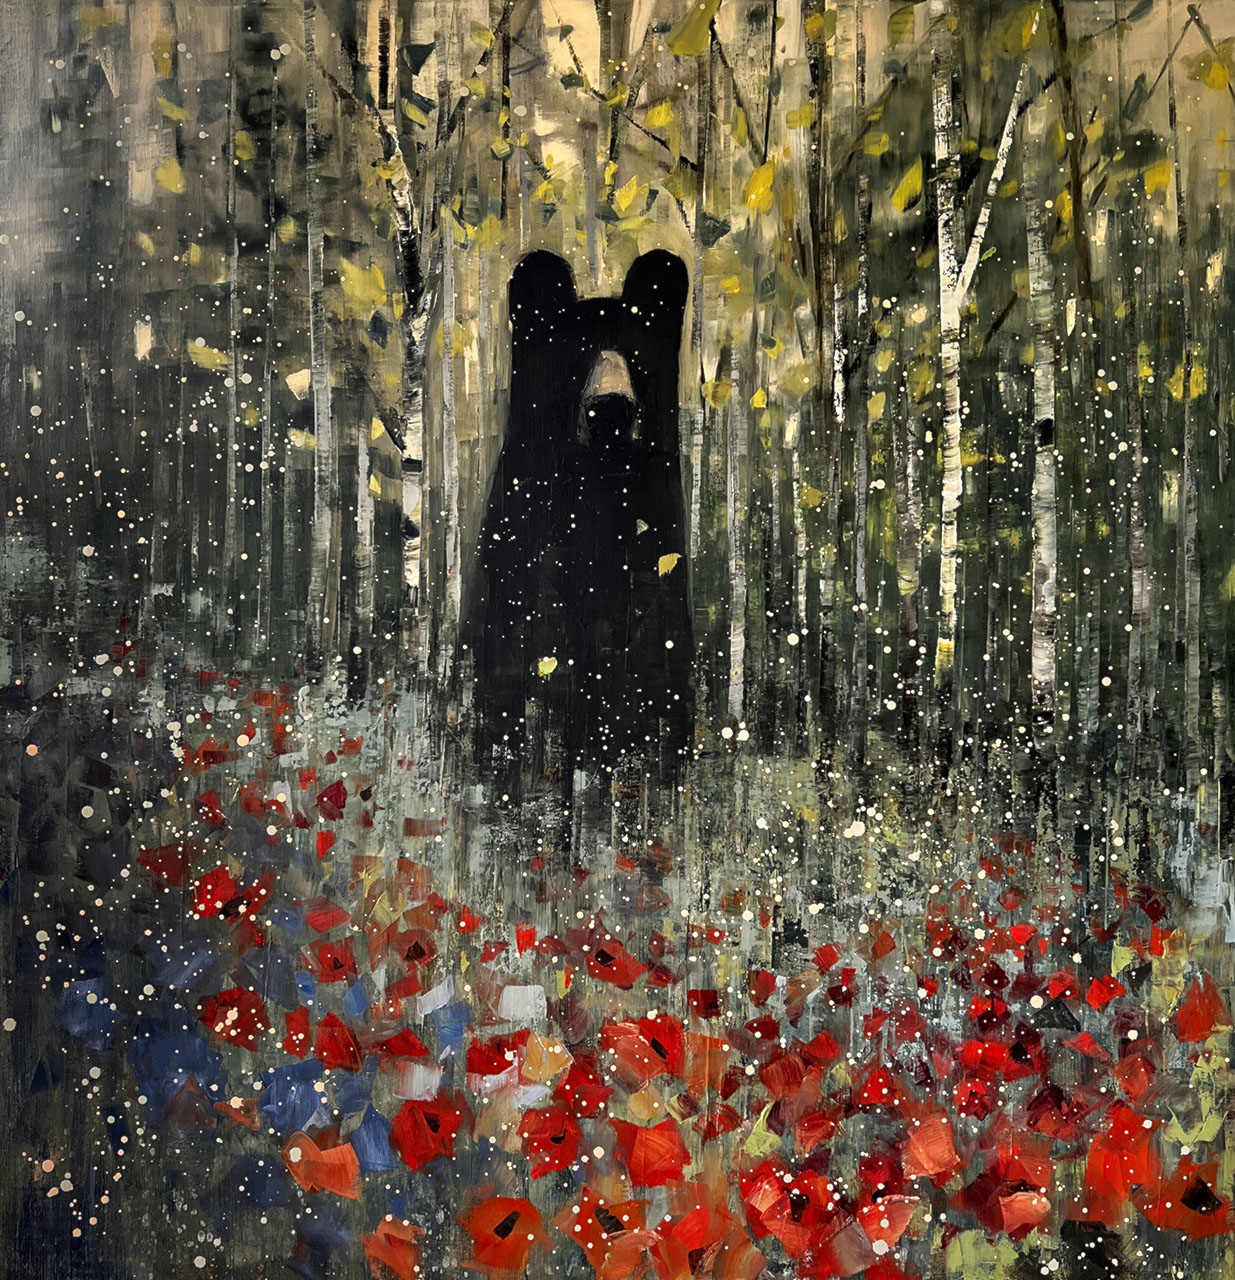 Black Bear with Poppies by Rebecca Kinkead